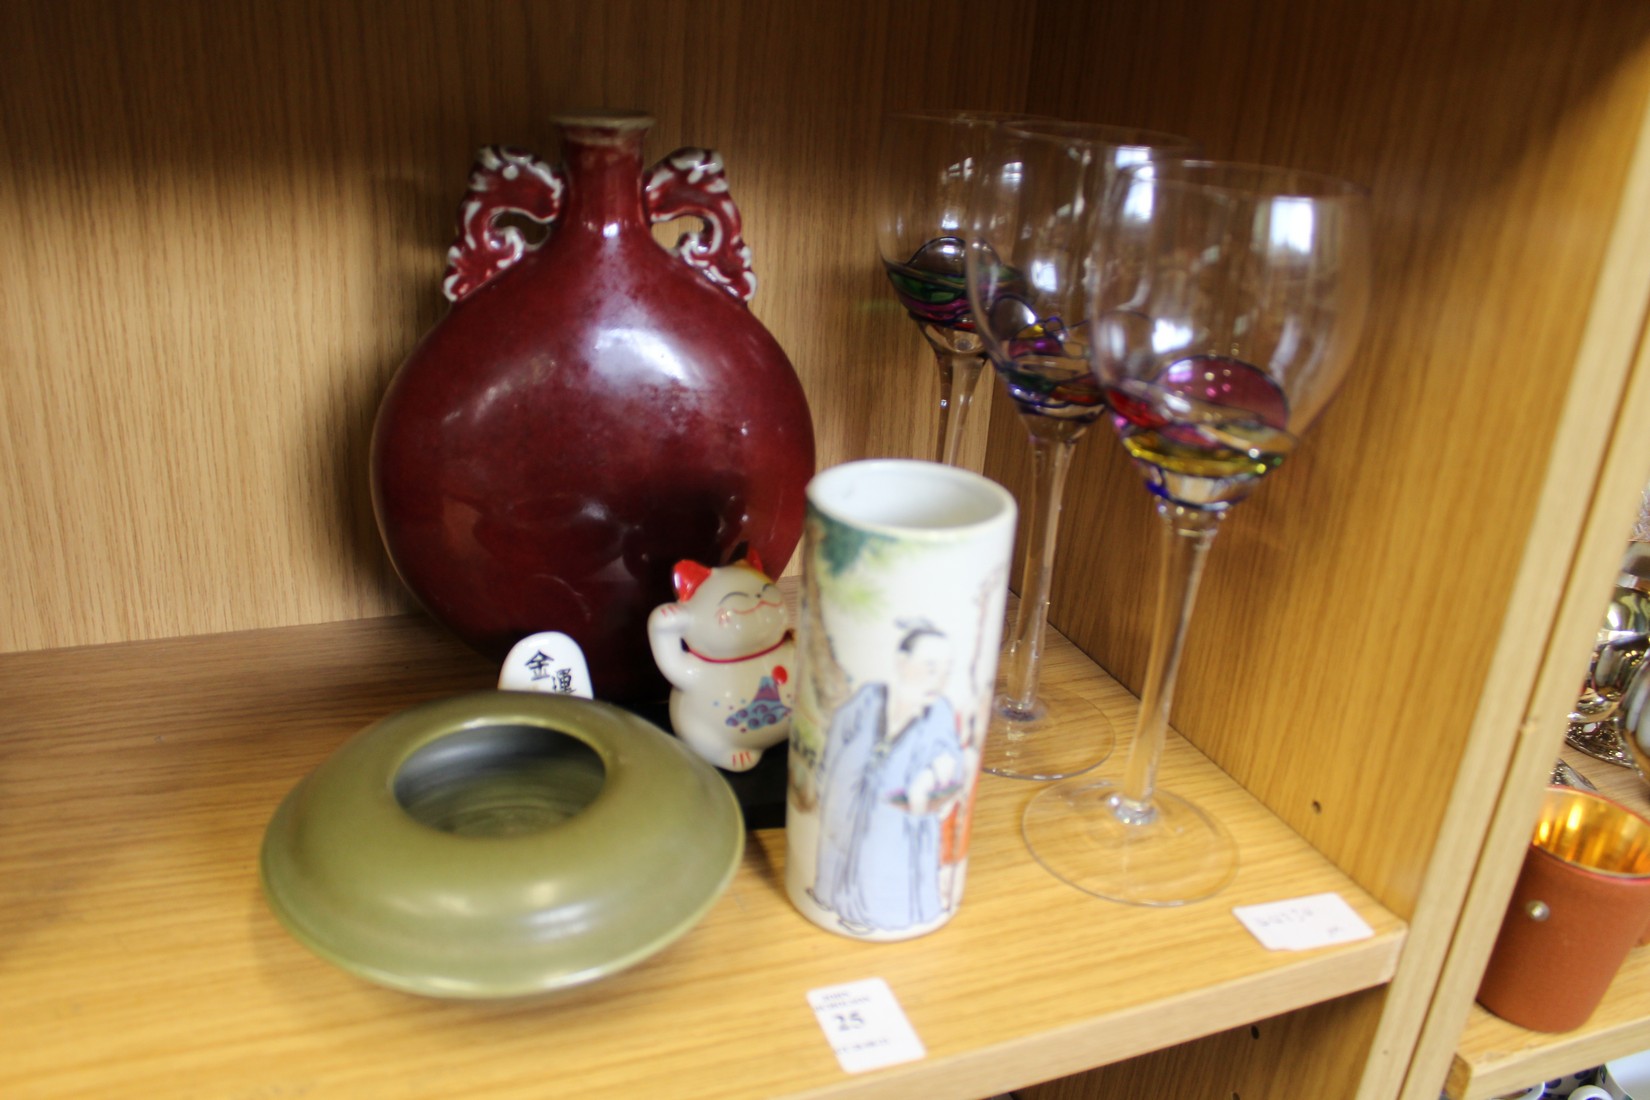 Chinese ceramics and decorative drinking glasses.